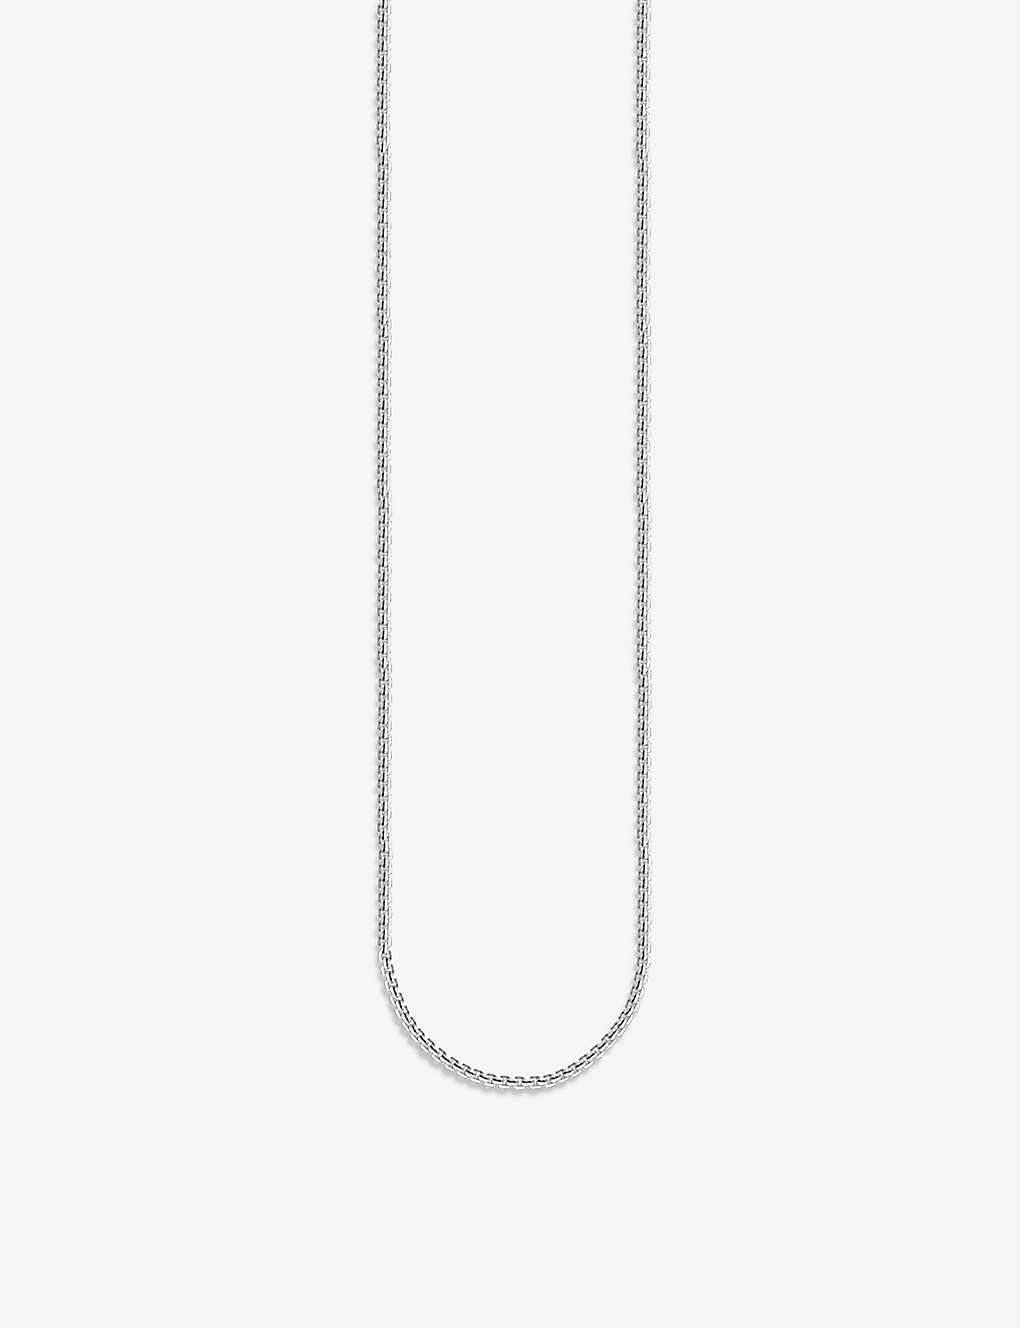 Thomas Sabo Venezia Sterling Silver Chain Necklace